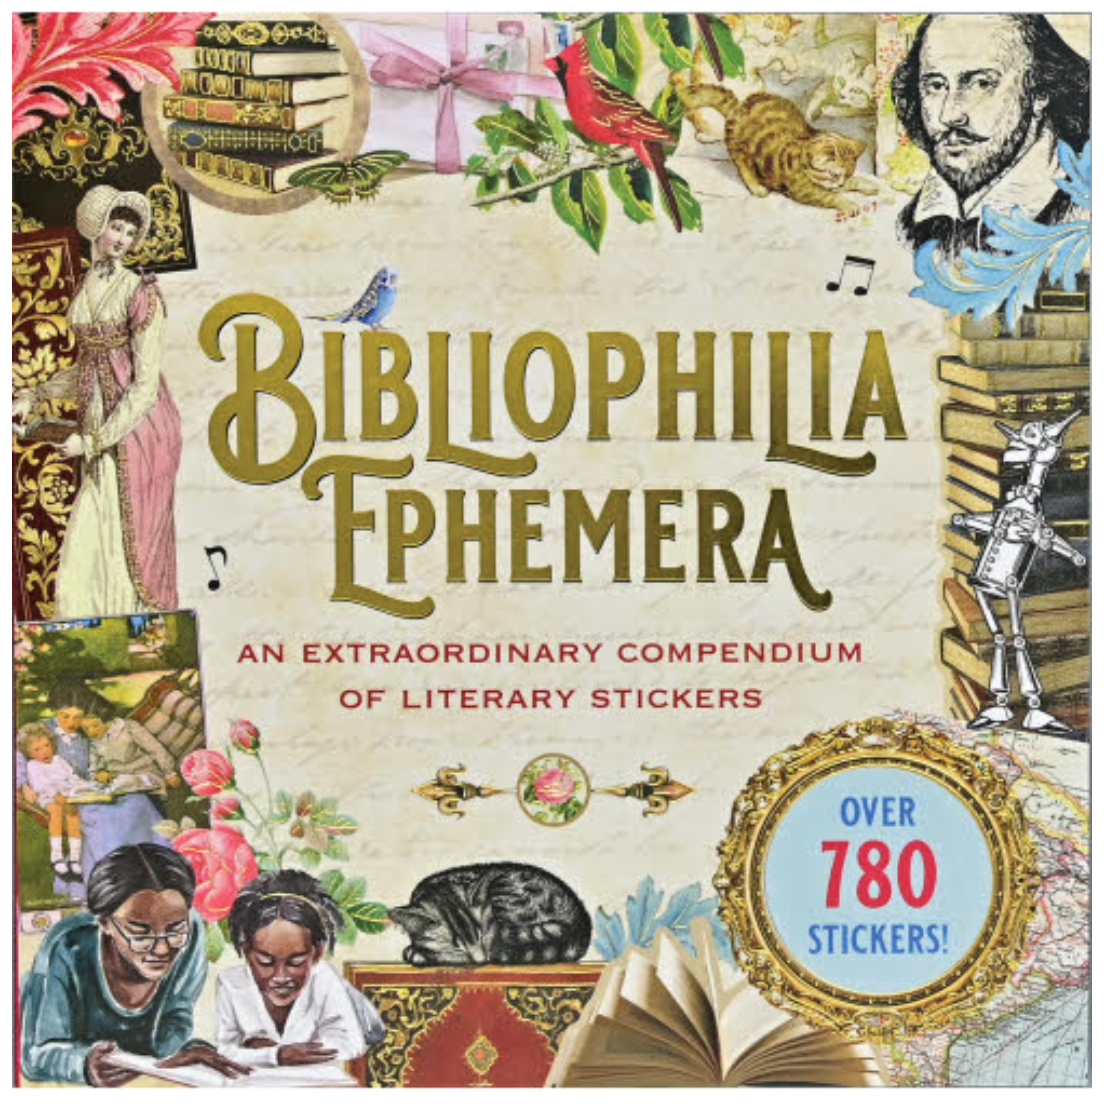 LOADS OF EPHEMERA STICKER BOOK - The Toy Box